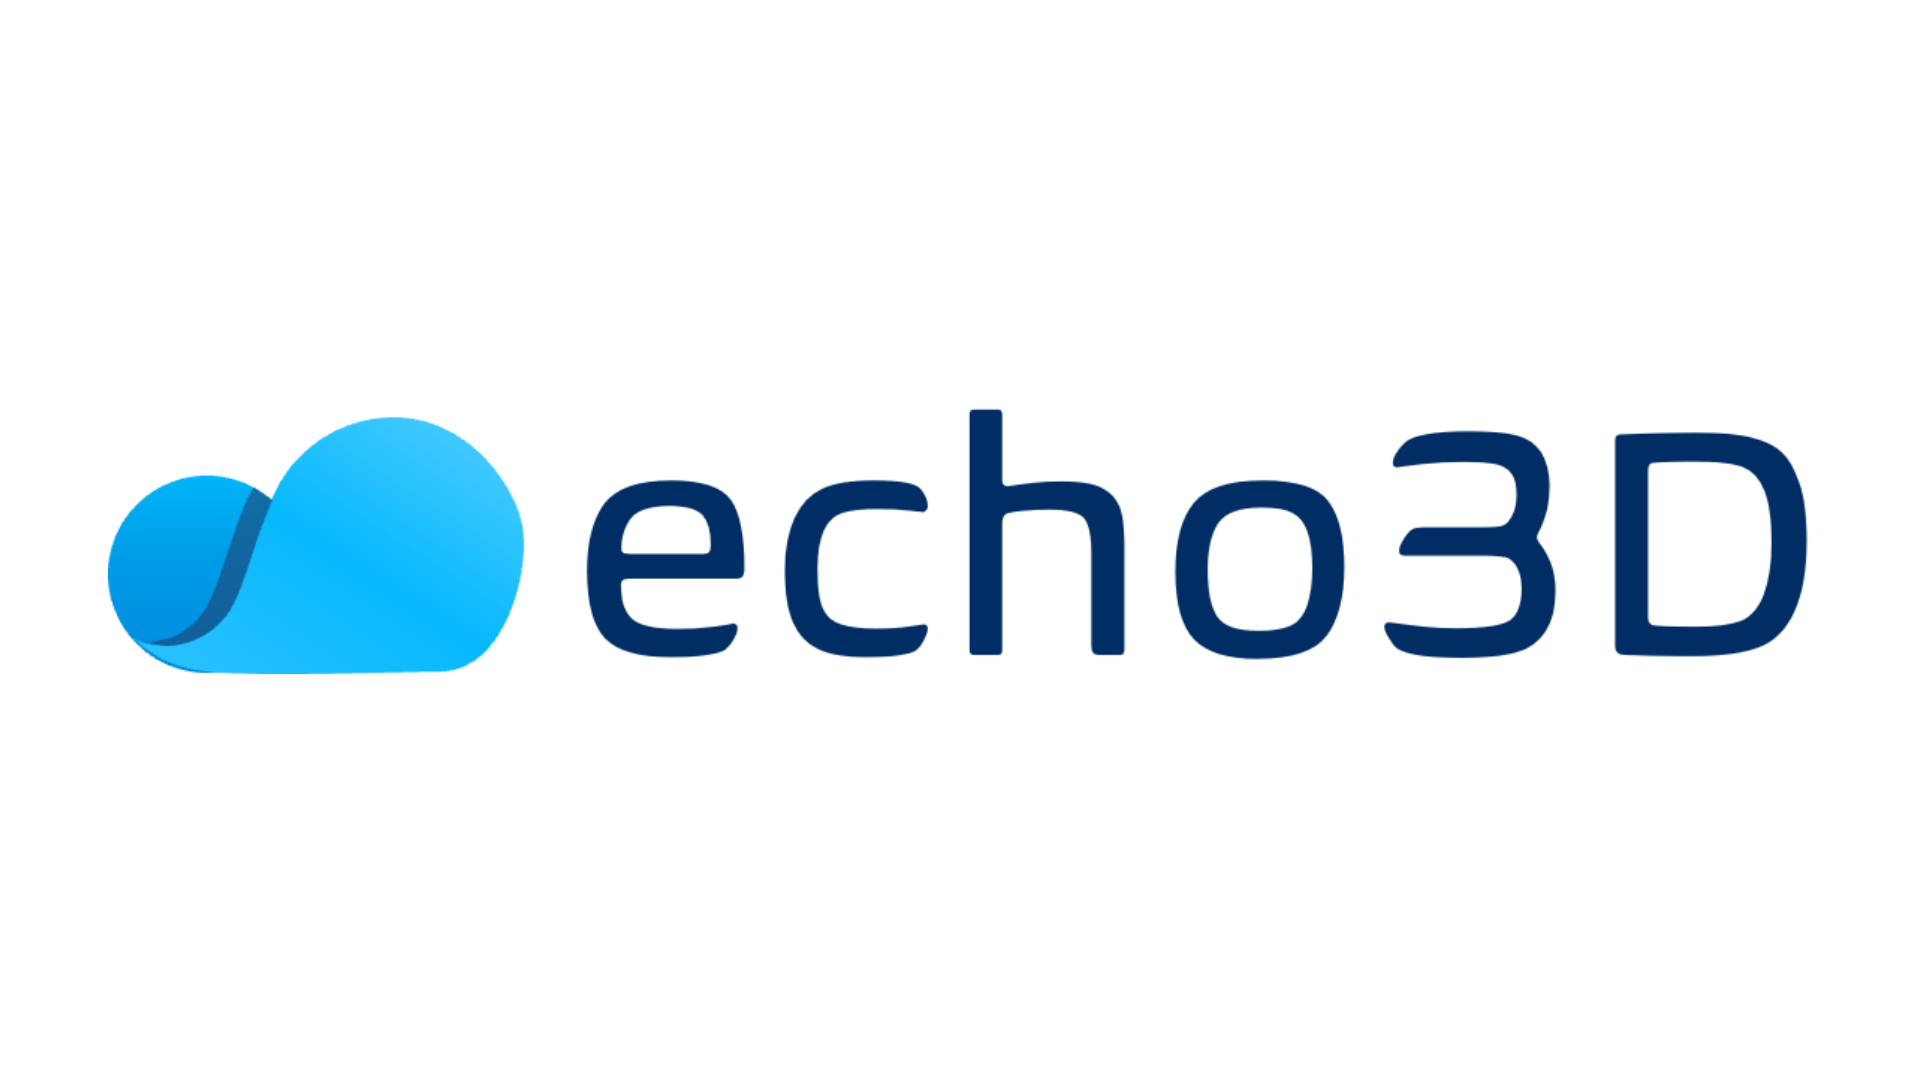 ECHO3D LOGO